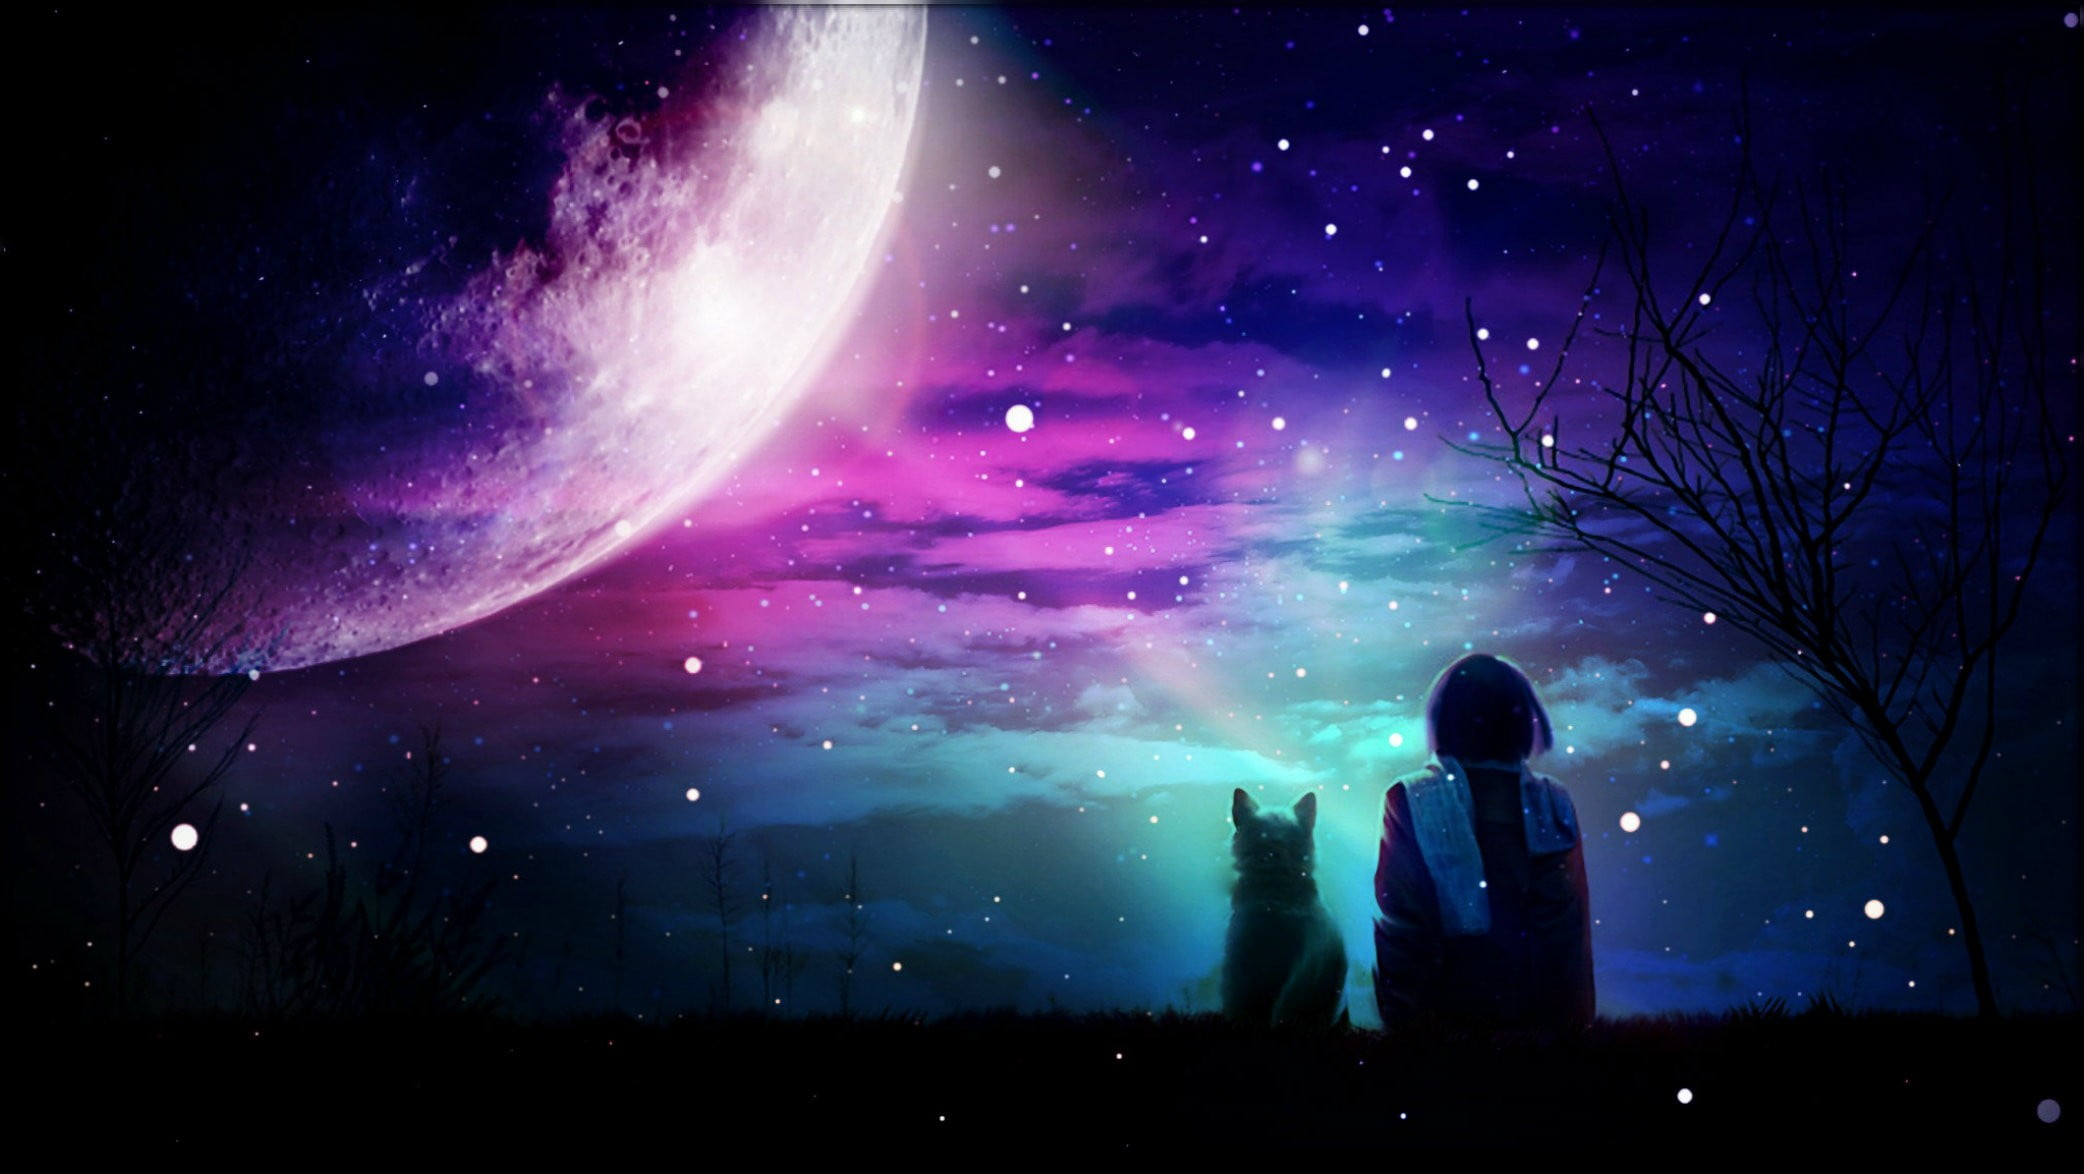 Wallpaper earth moon with purple light illustration, artwork, digital art